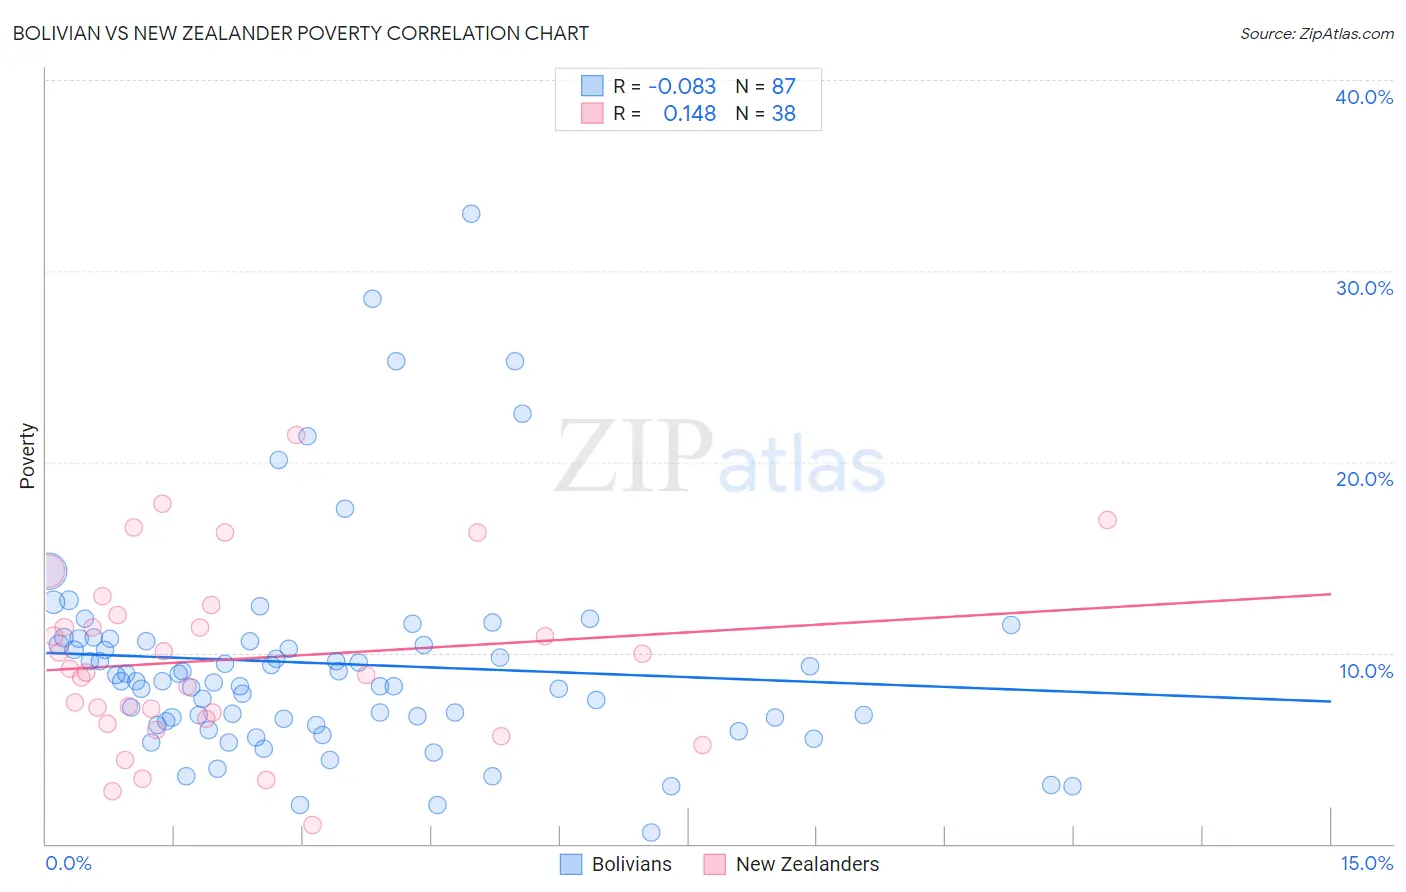 Bolivian vs New Zealander Poverty